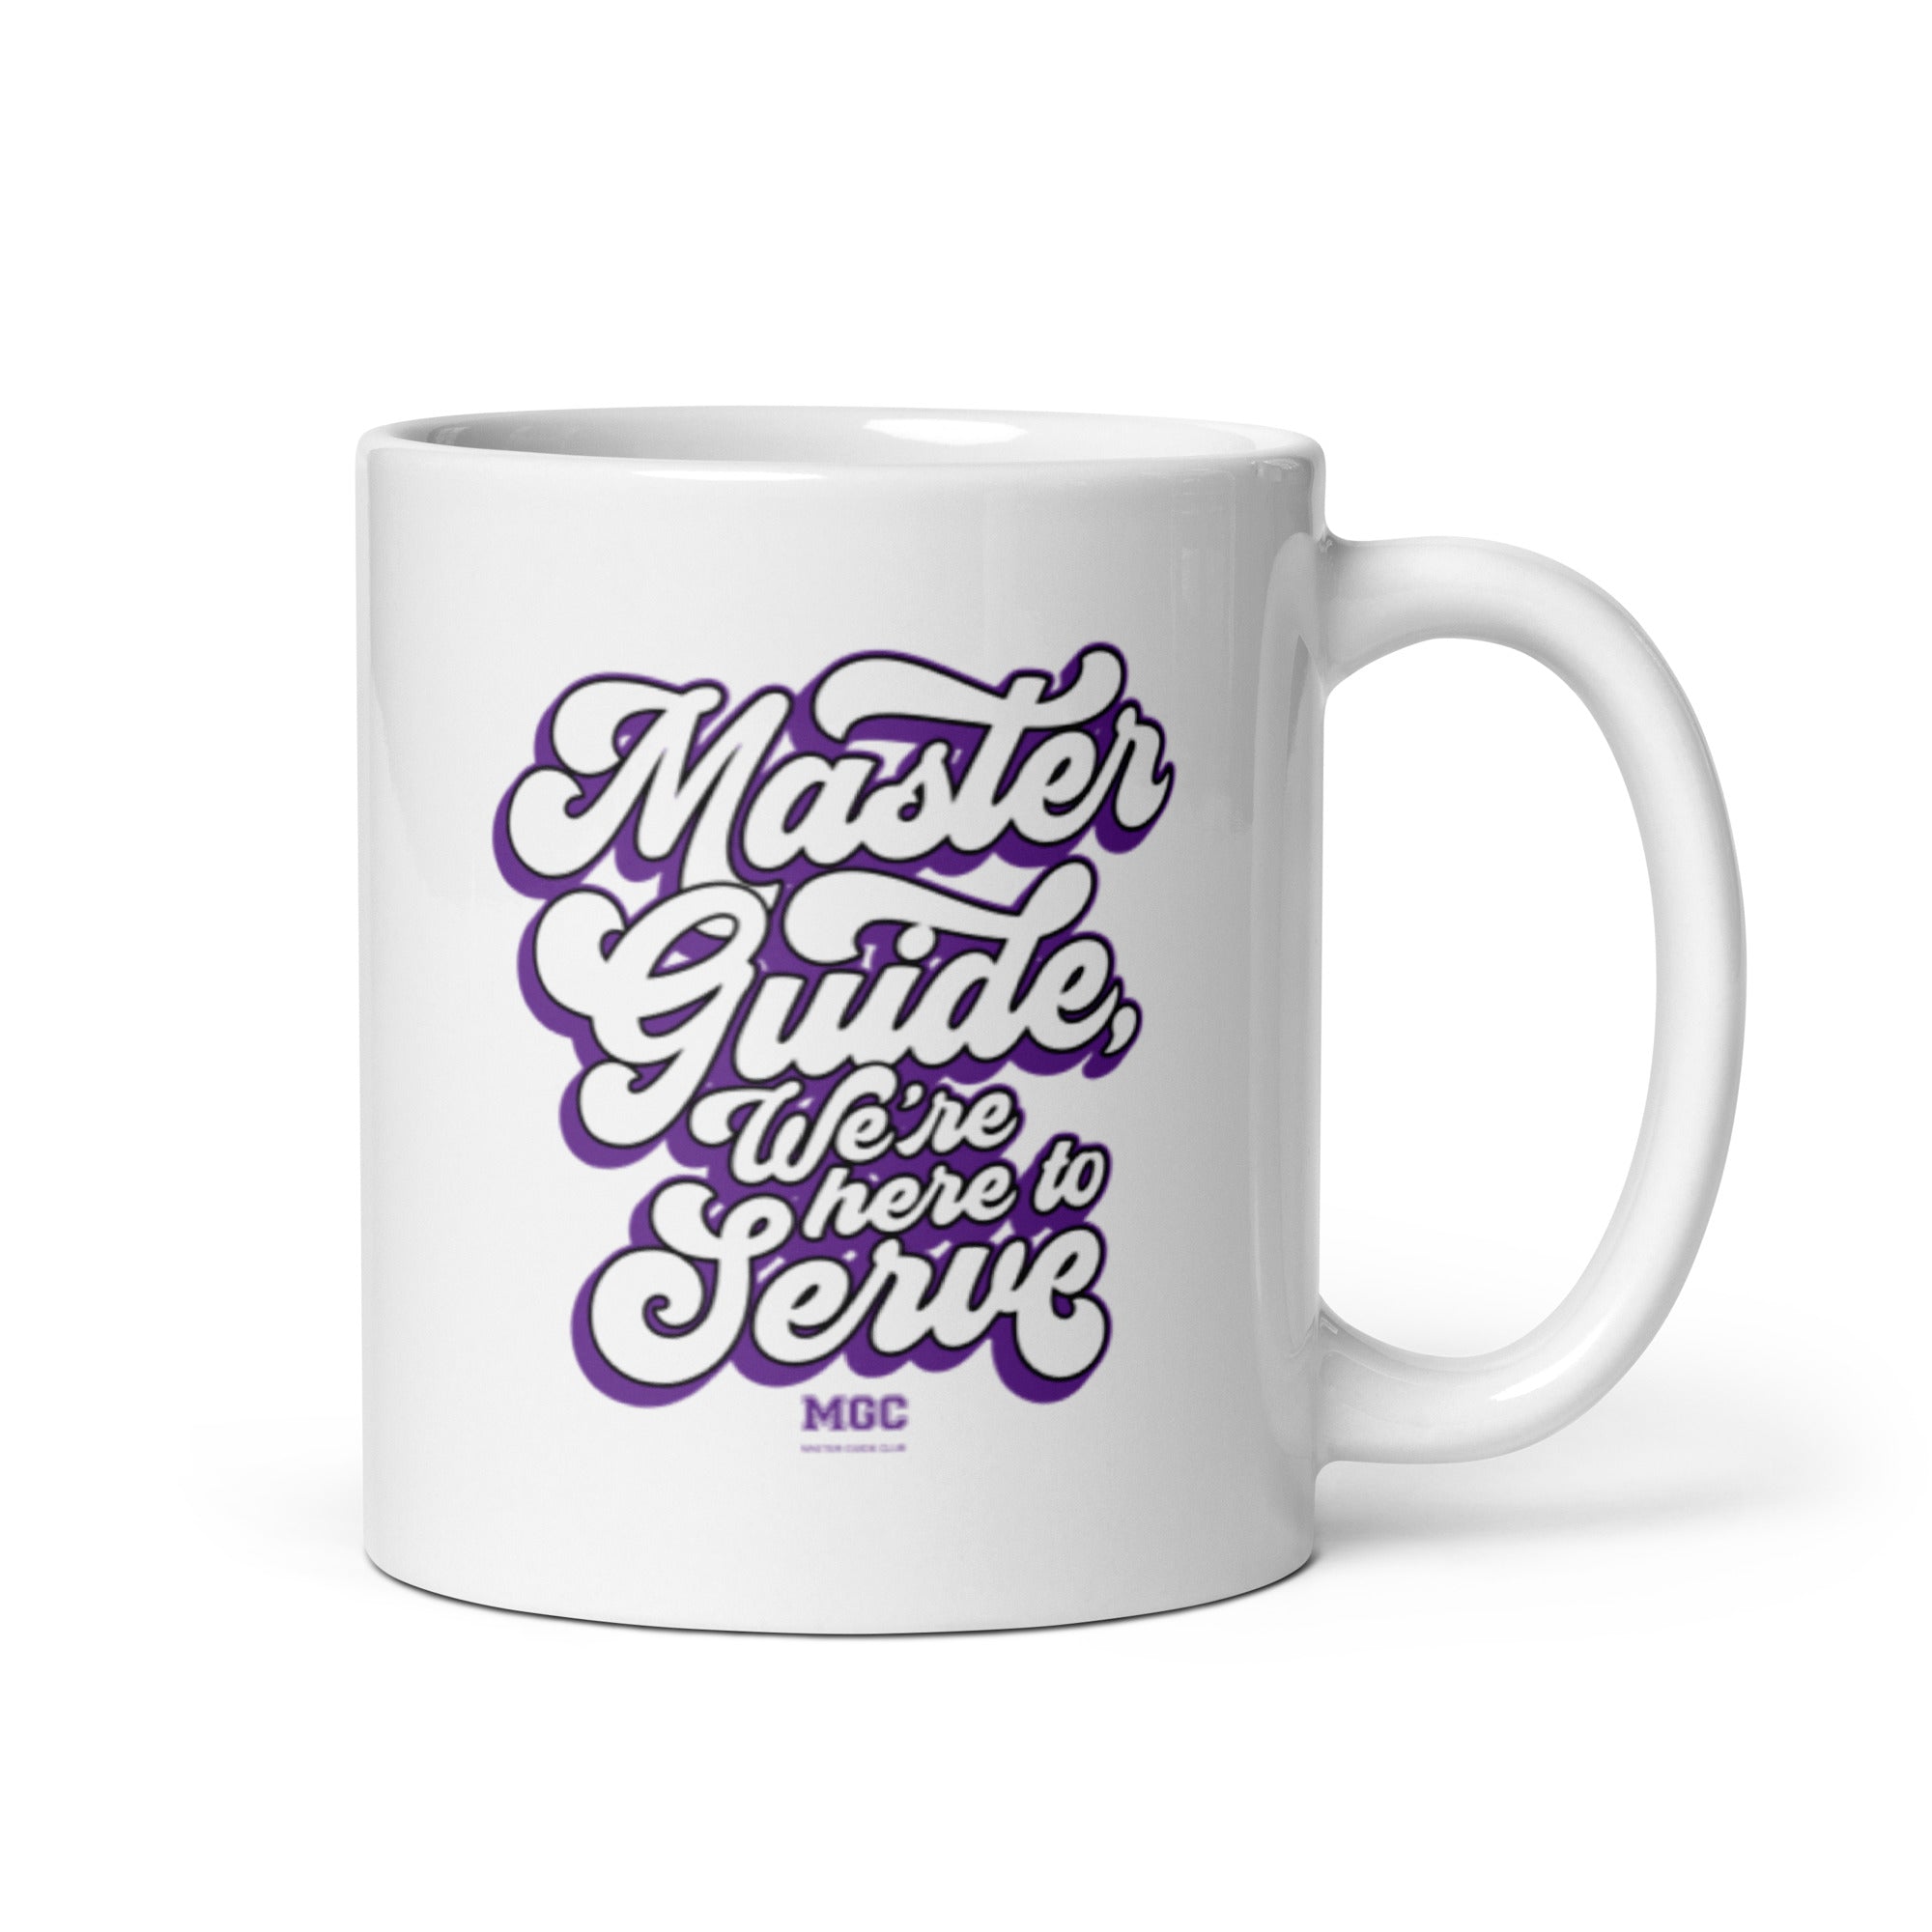 MGC White glossy mug We're her to serve